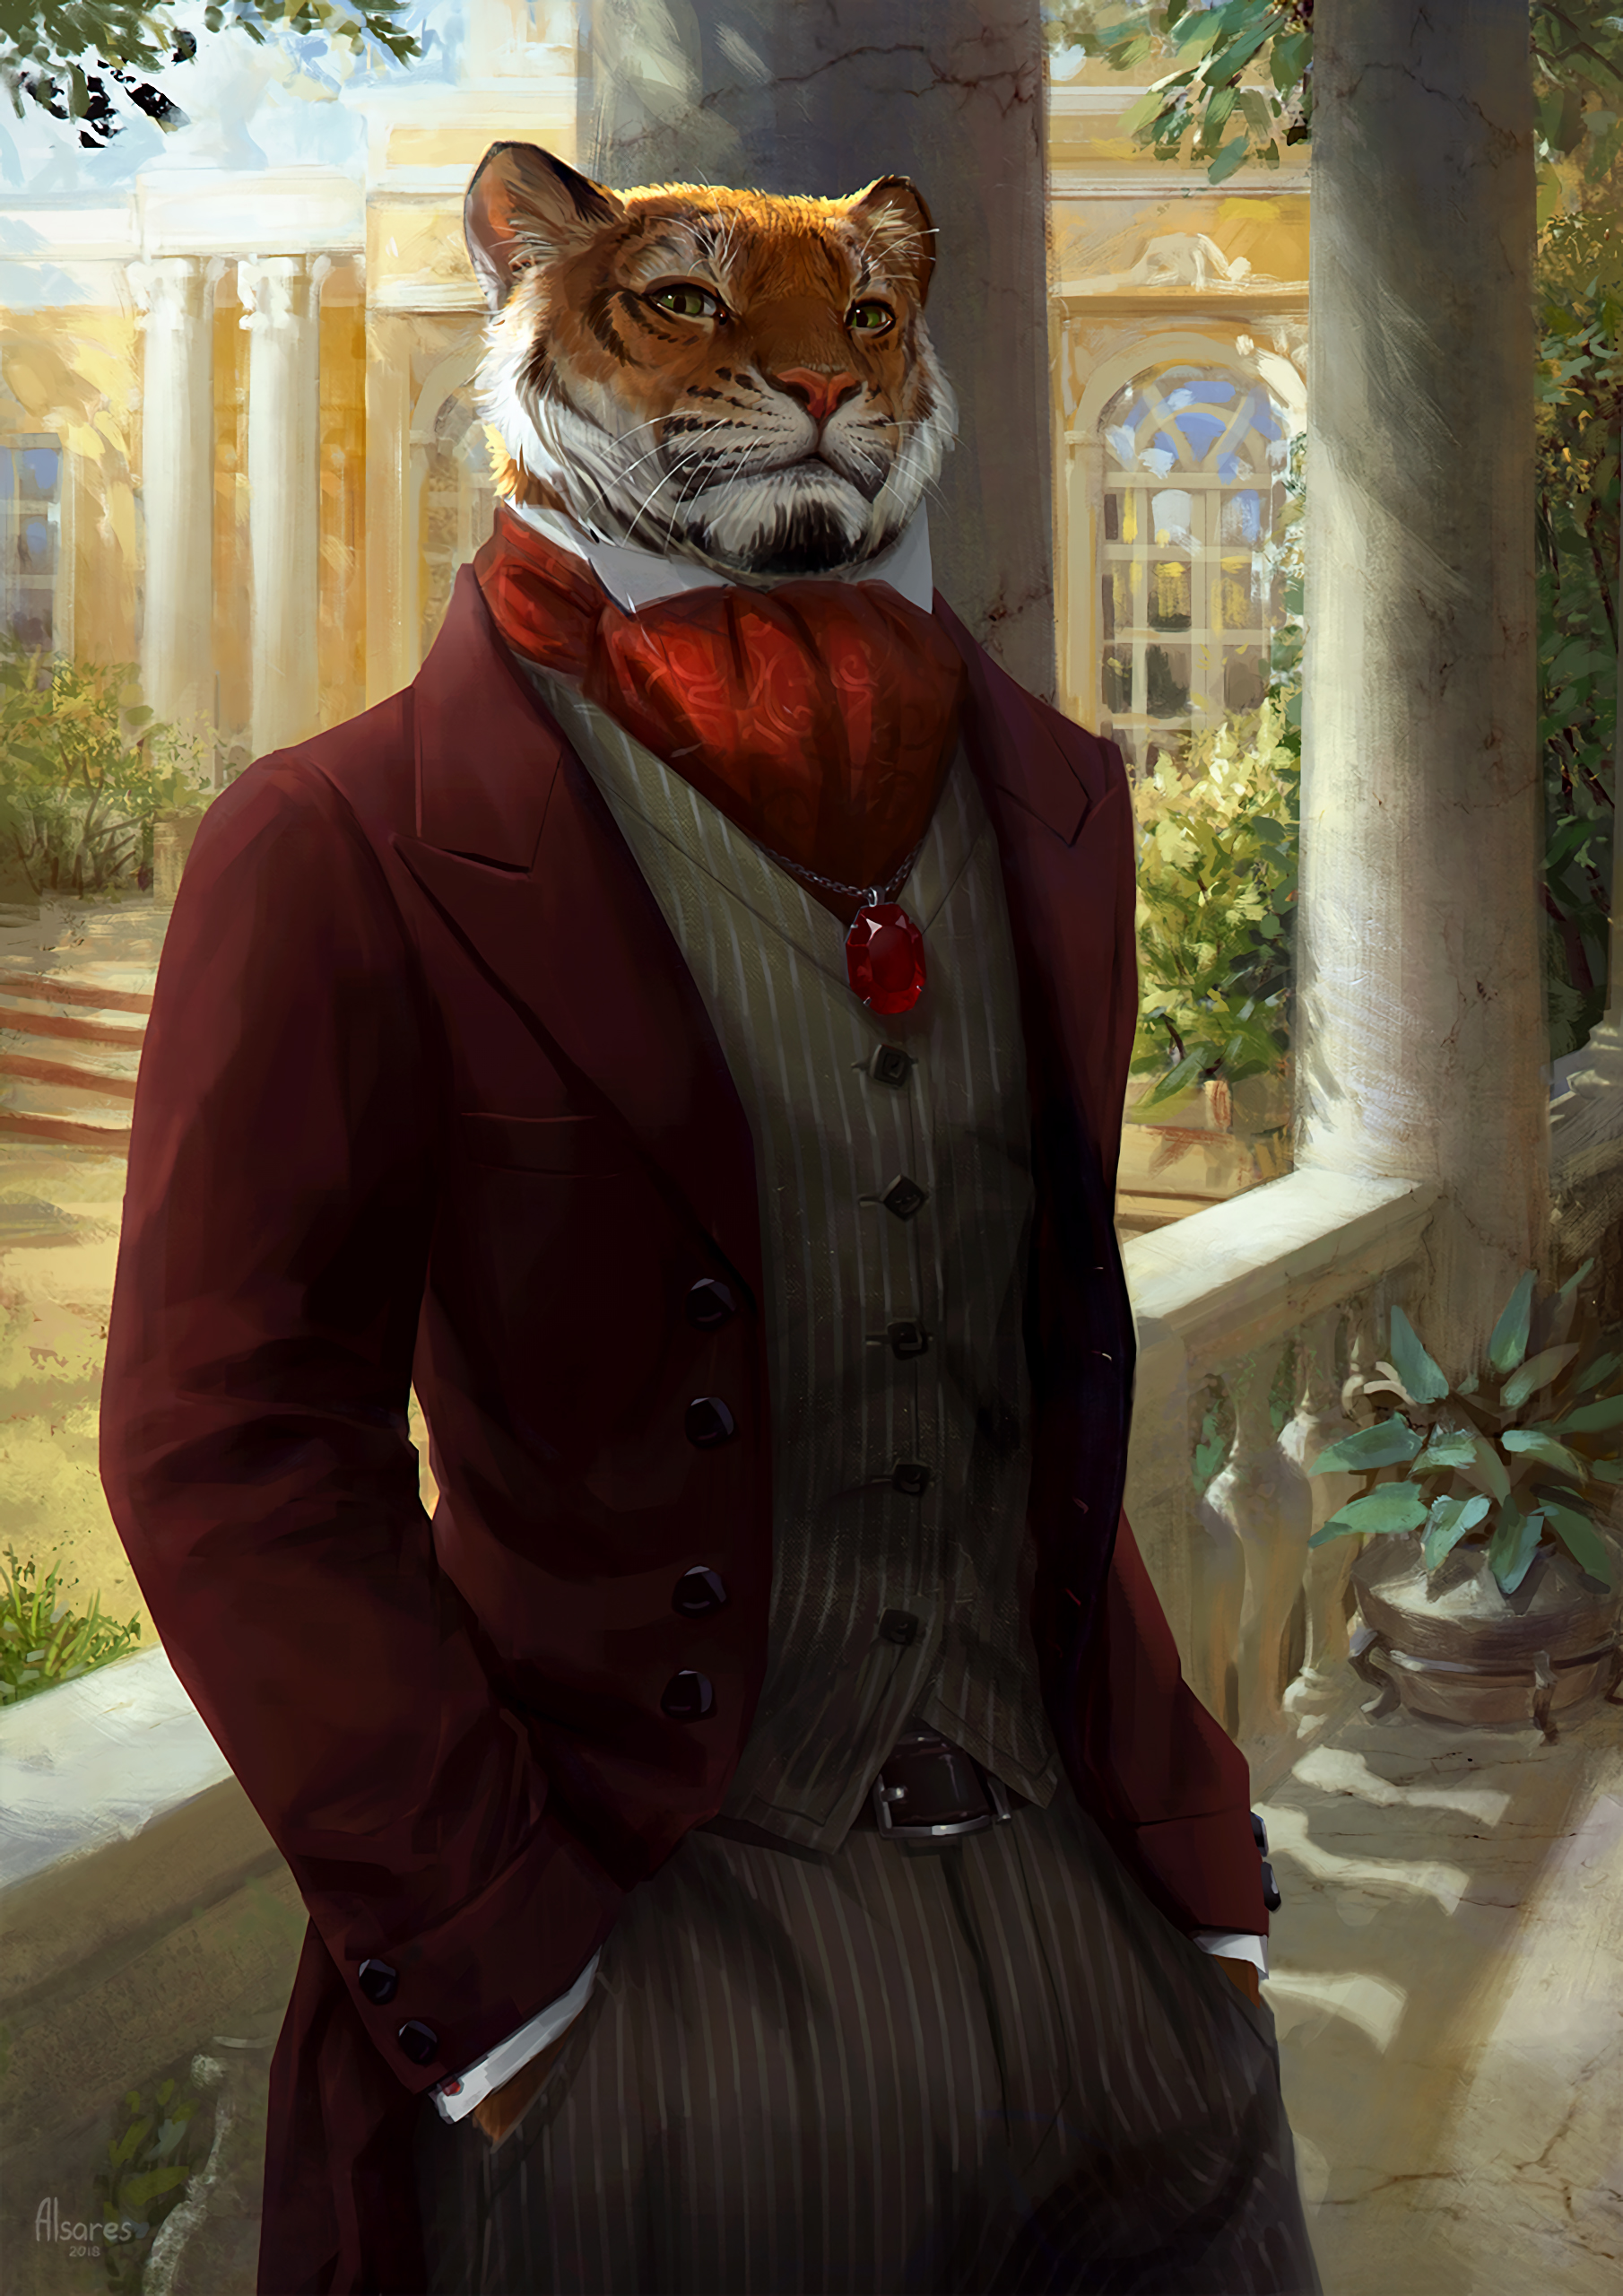 tiger, animal, art, costume, aristocrat